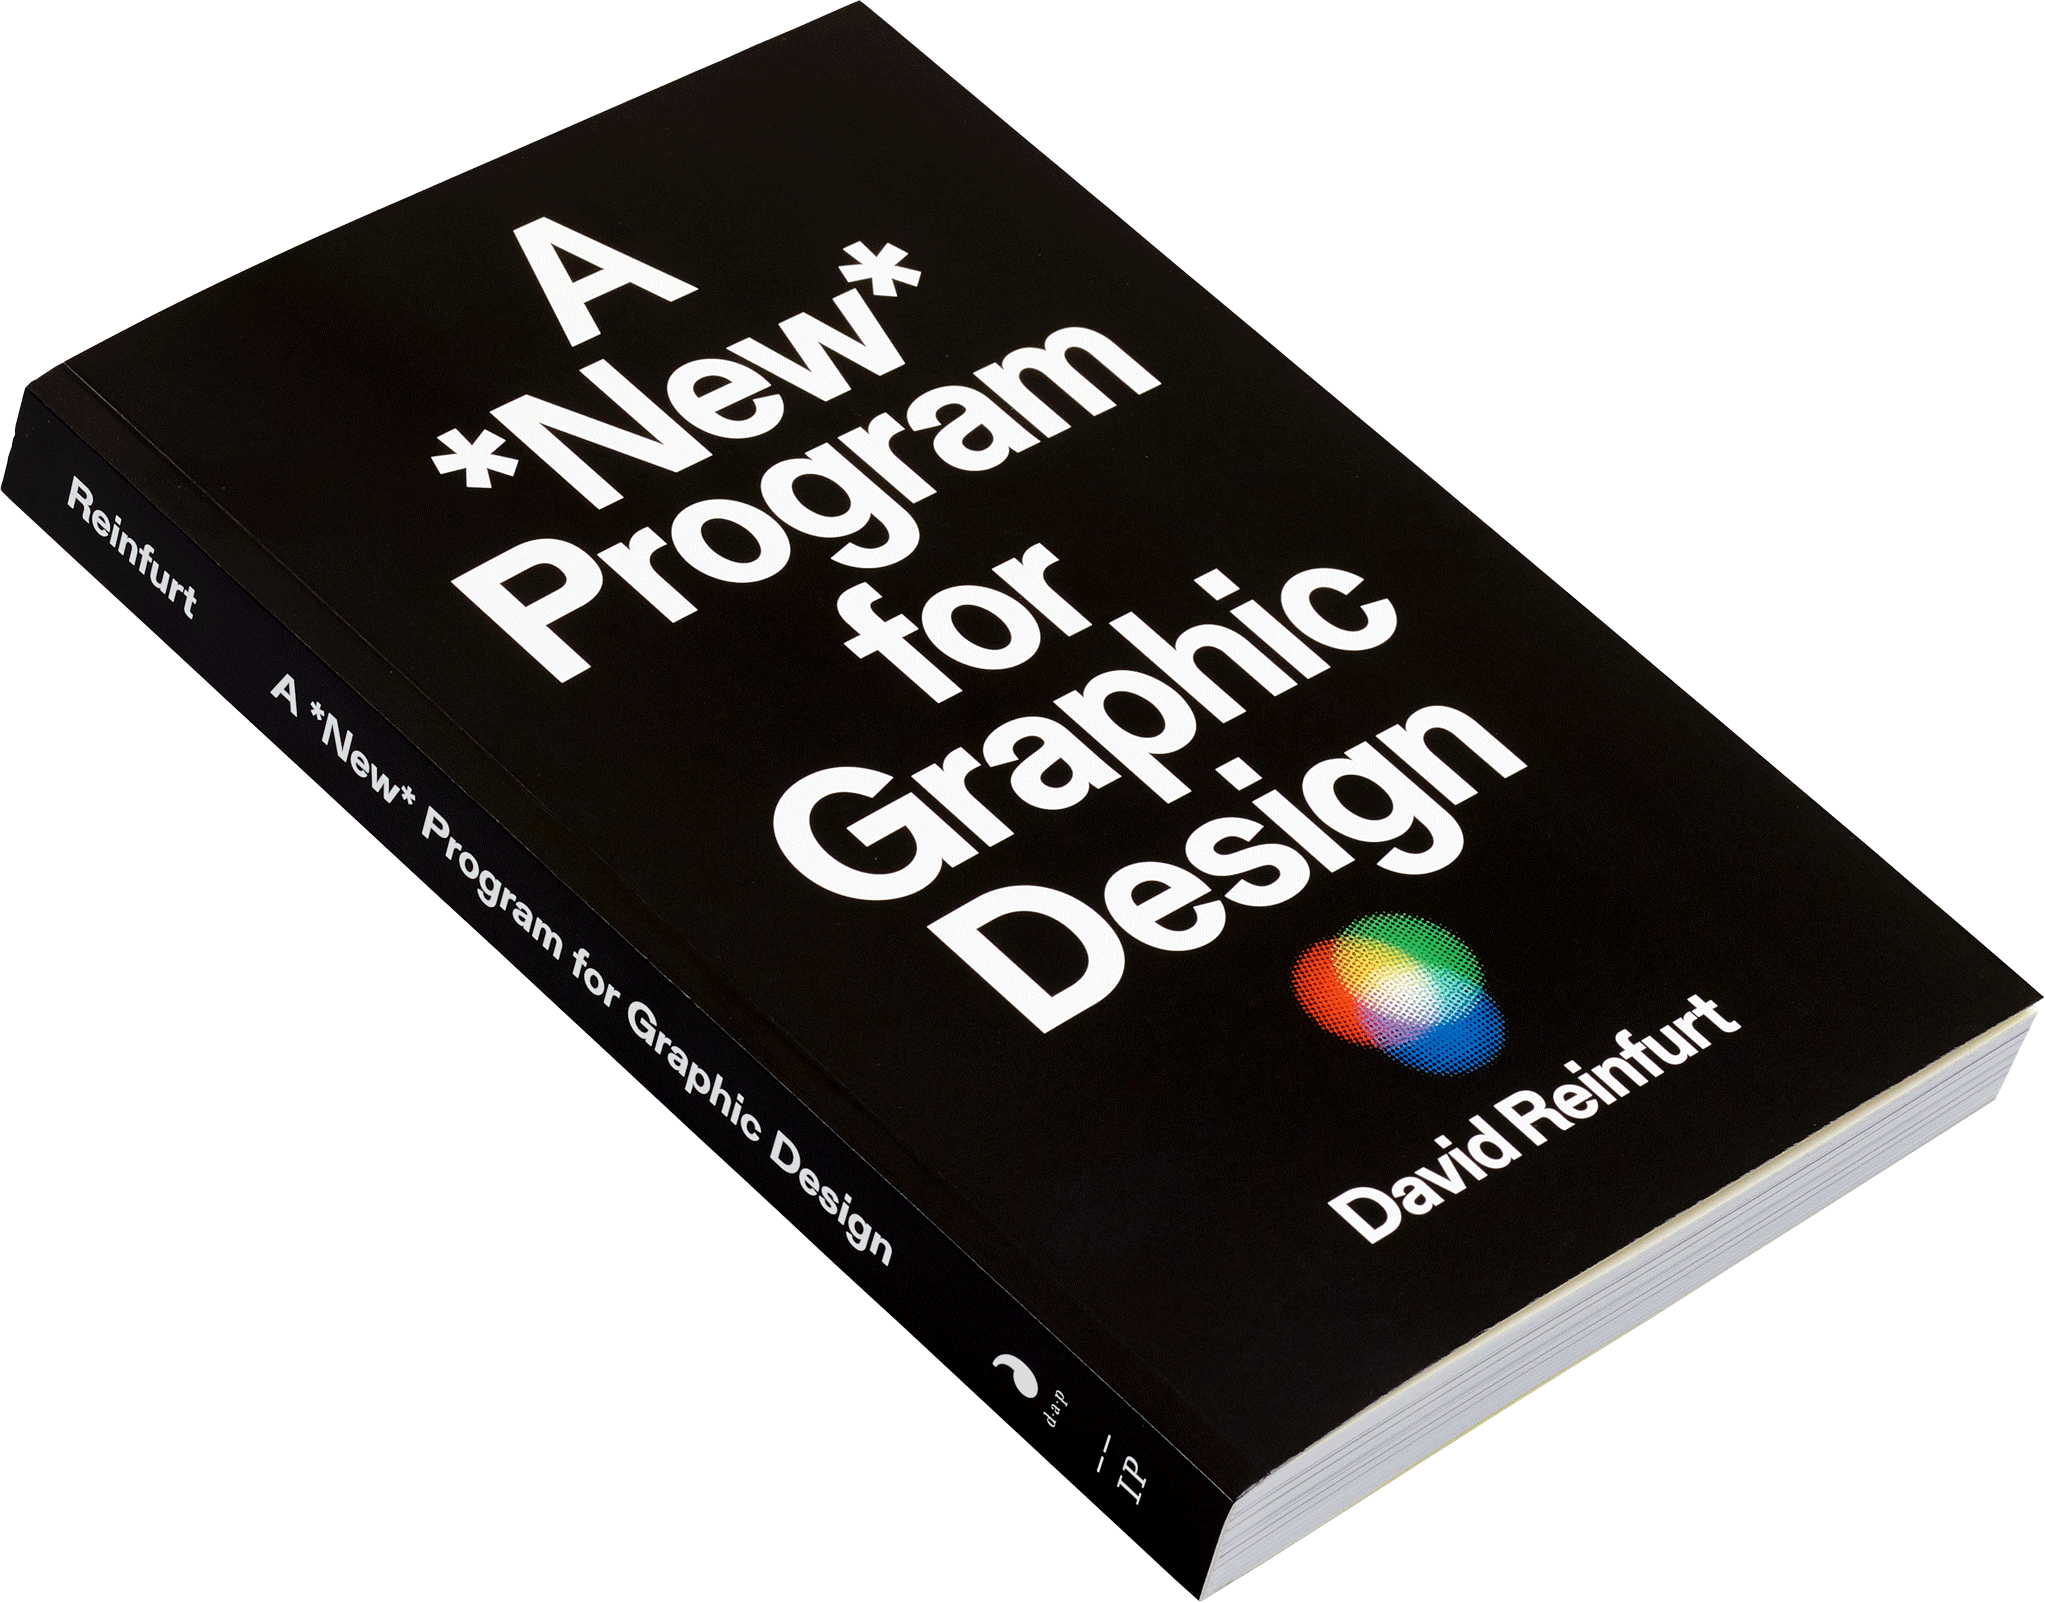 A *New* Program for Graphic Design cover